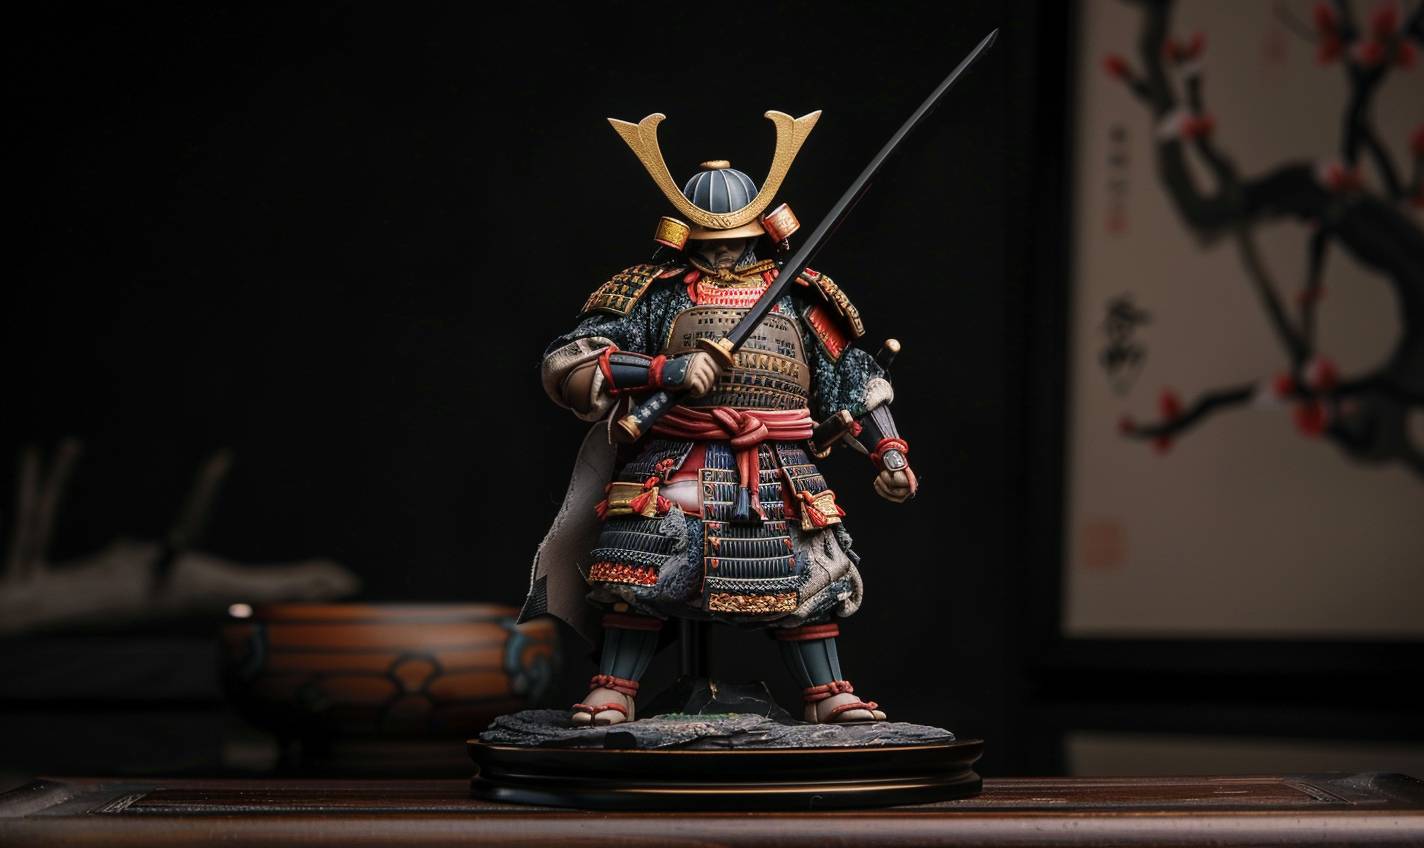 Samurai figurine designed and painted by Liu Ye on black background